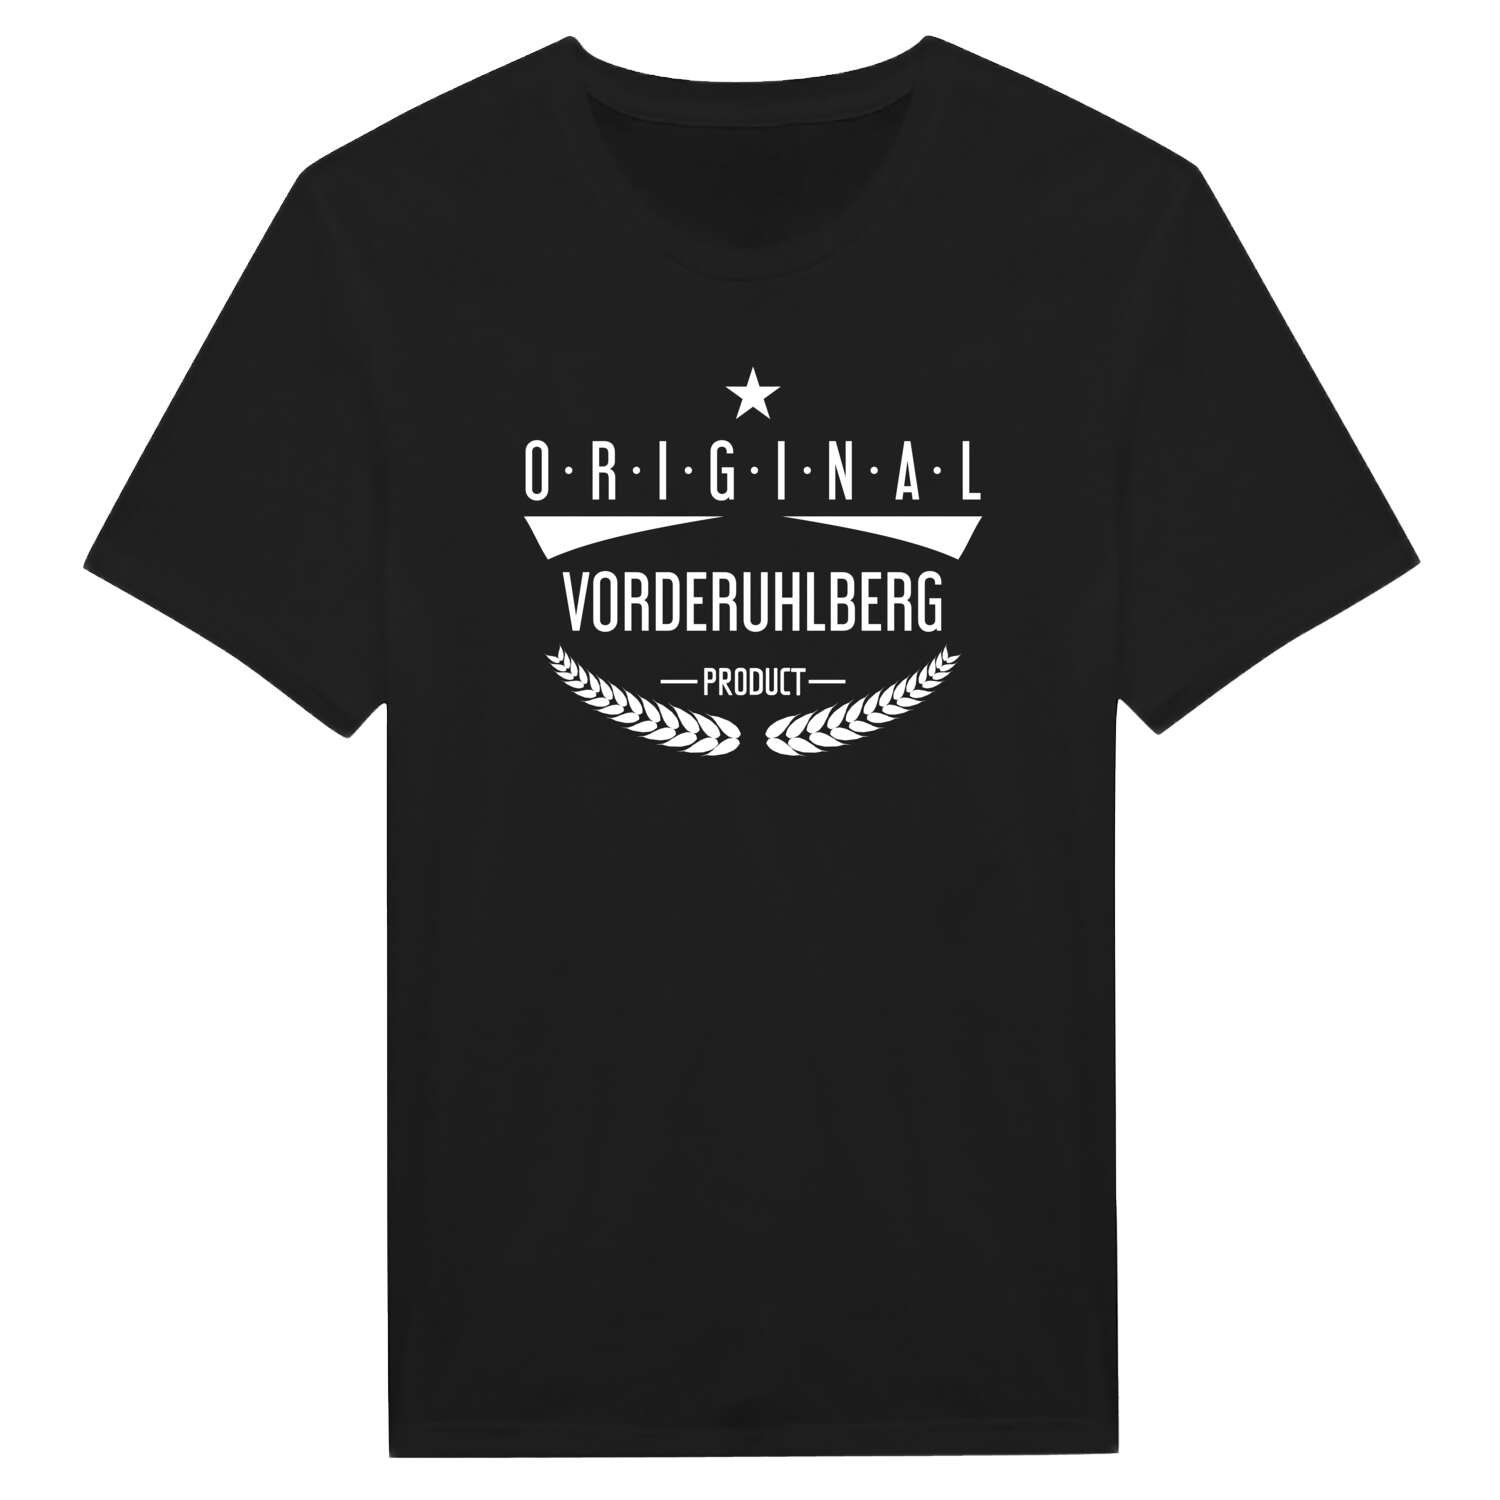 Vorderuhlberg T-Shirt »Original Product«